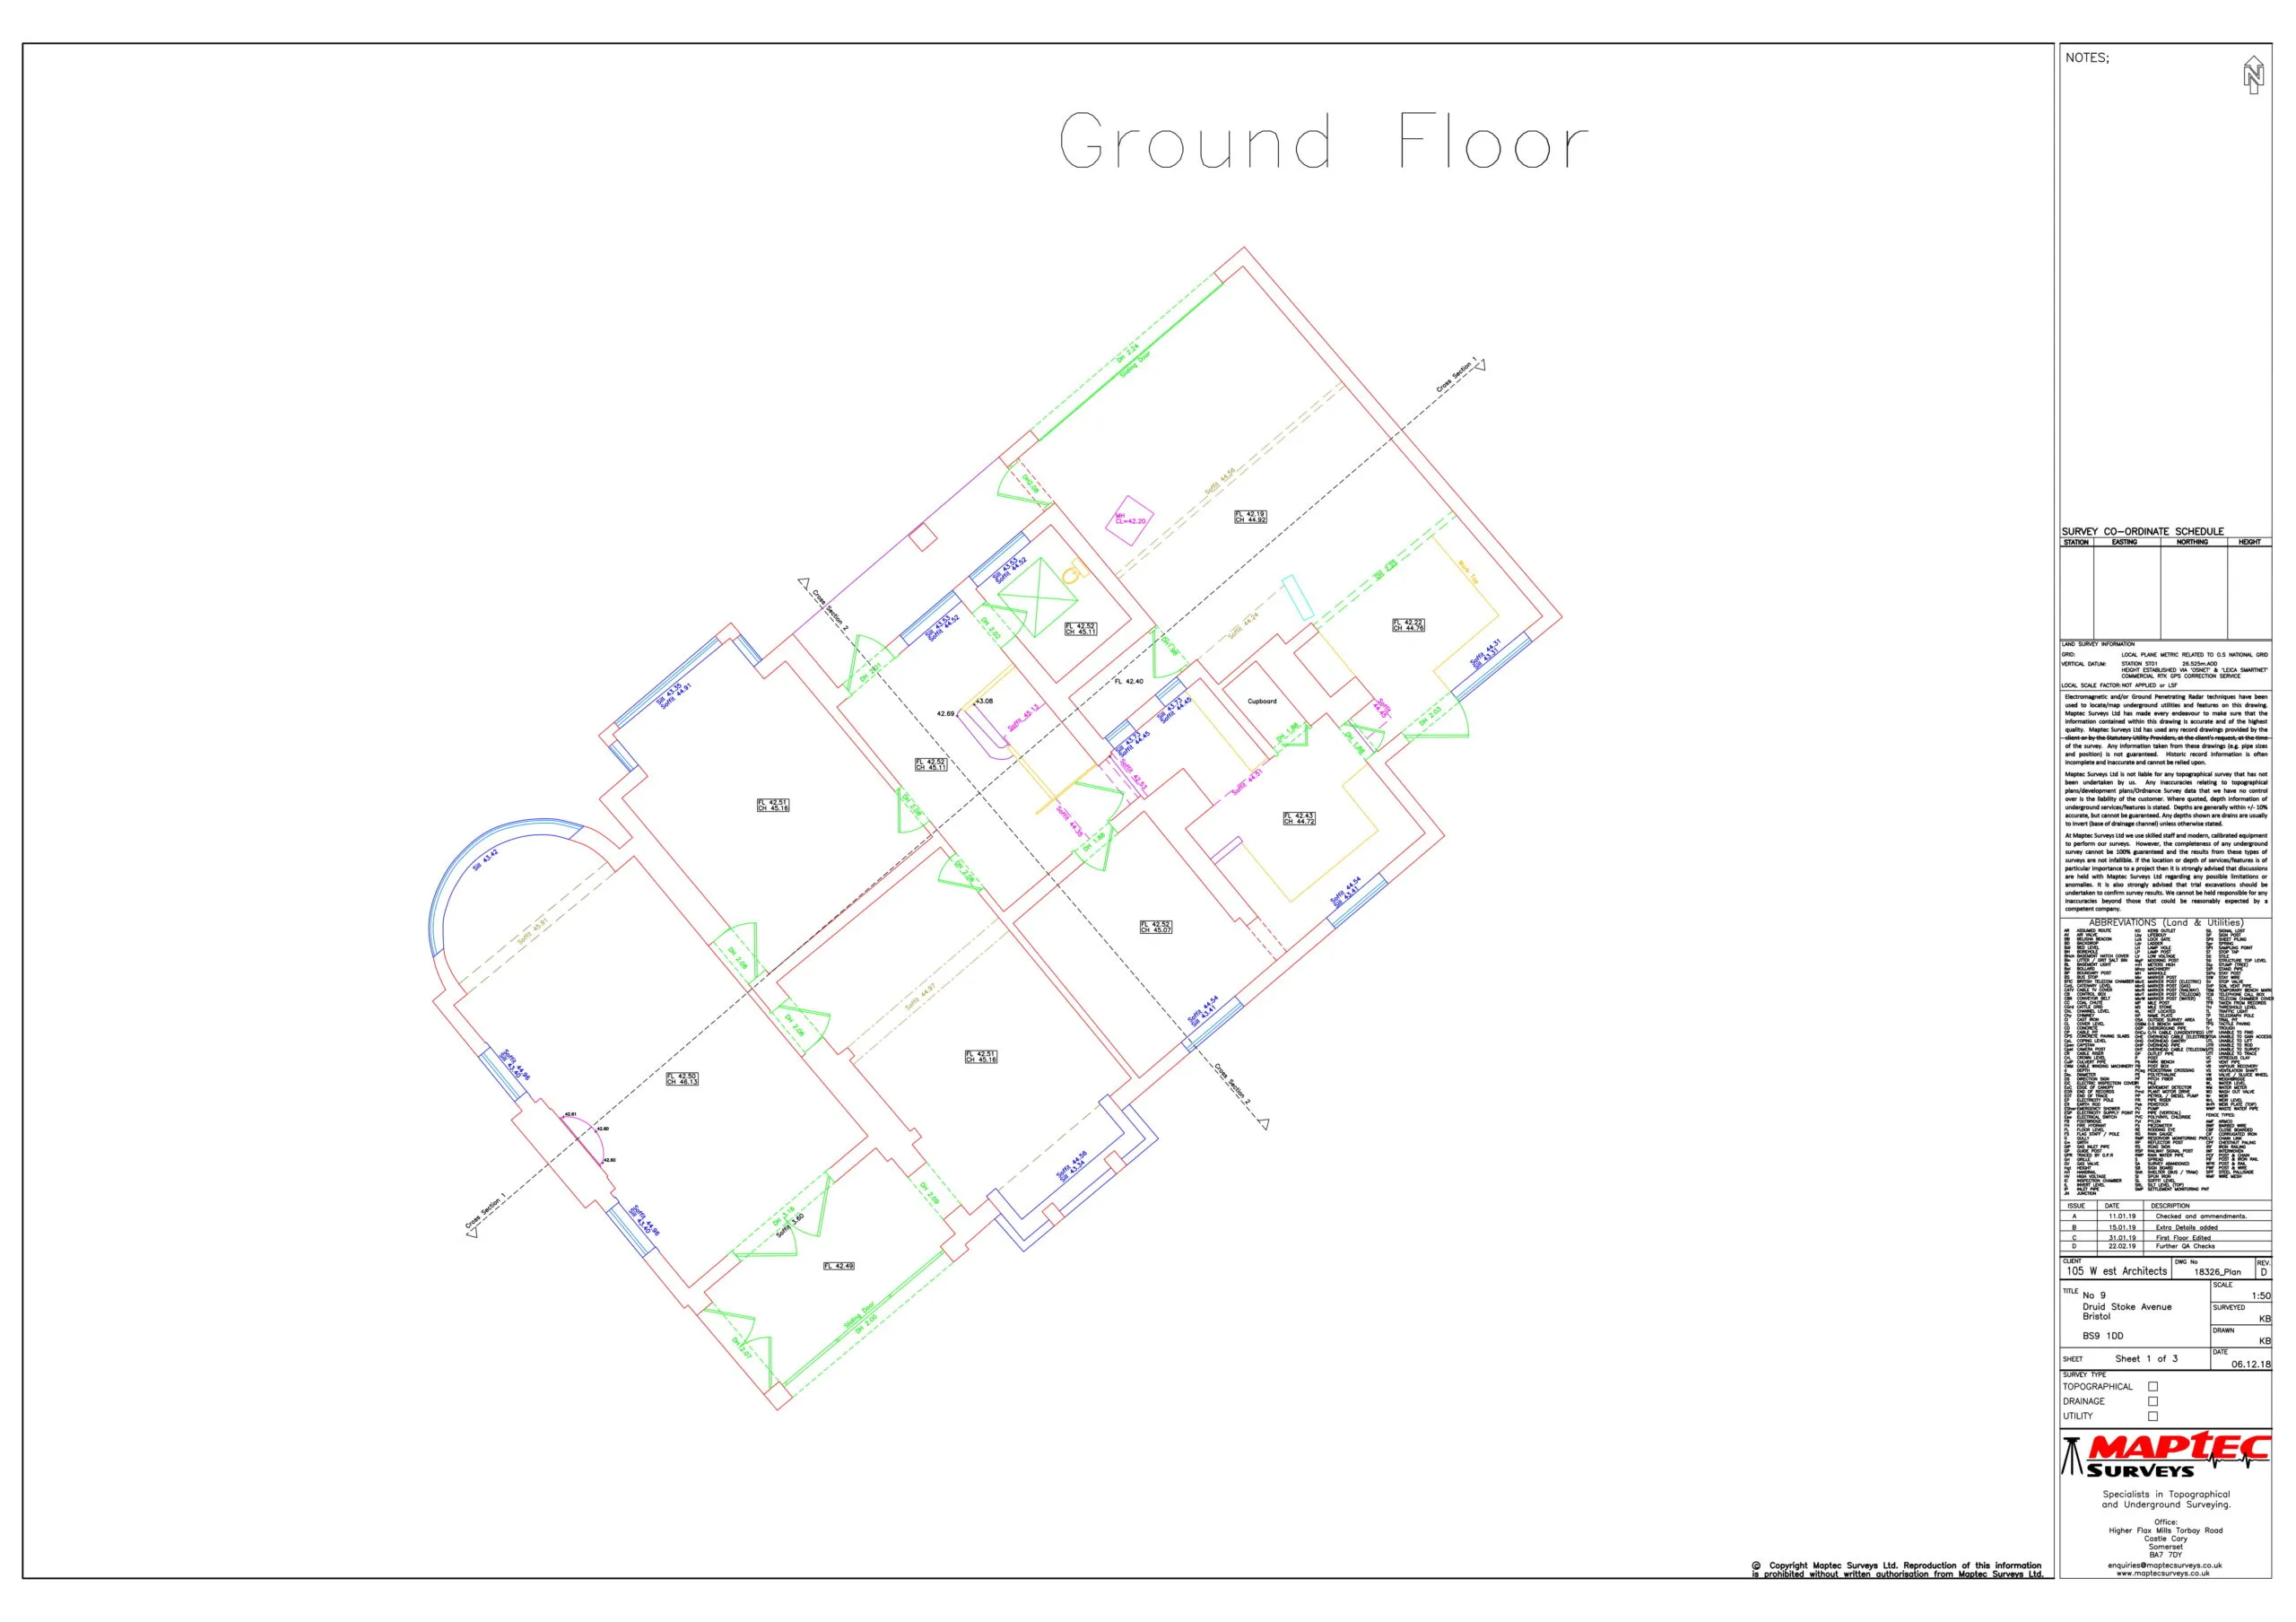 18326_Floorplans_RevC_F_Ground-Floor-1-1